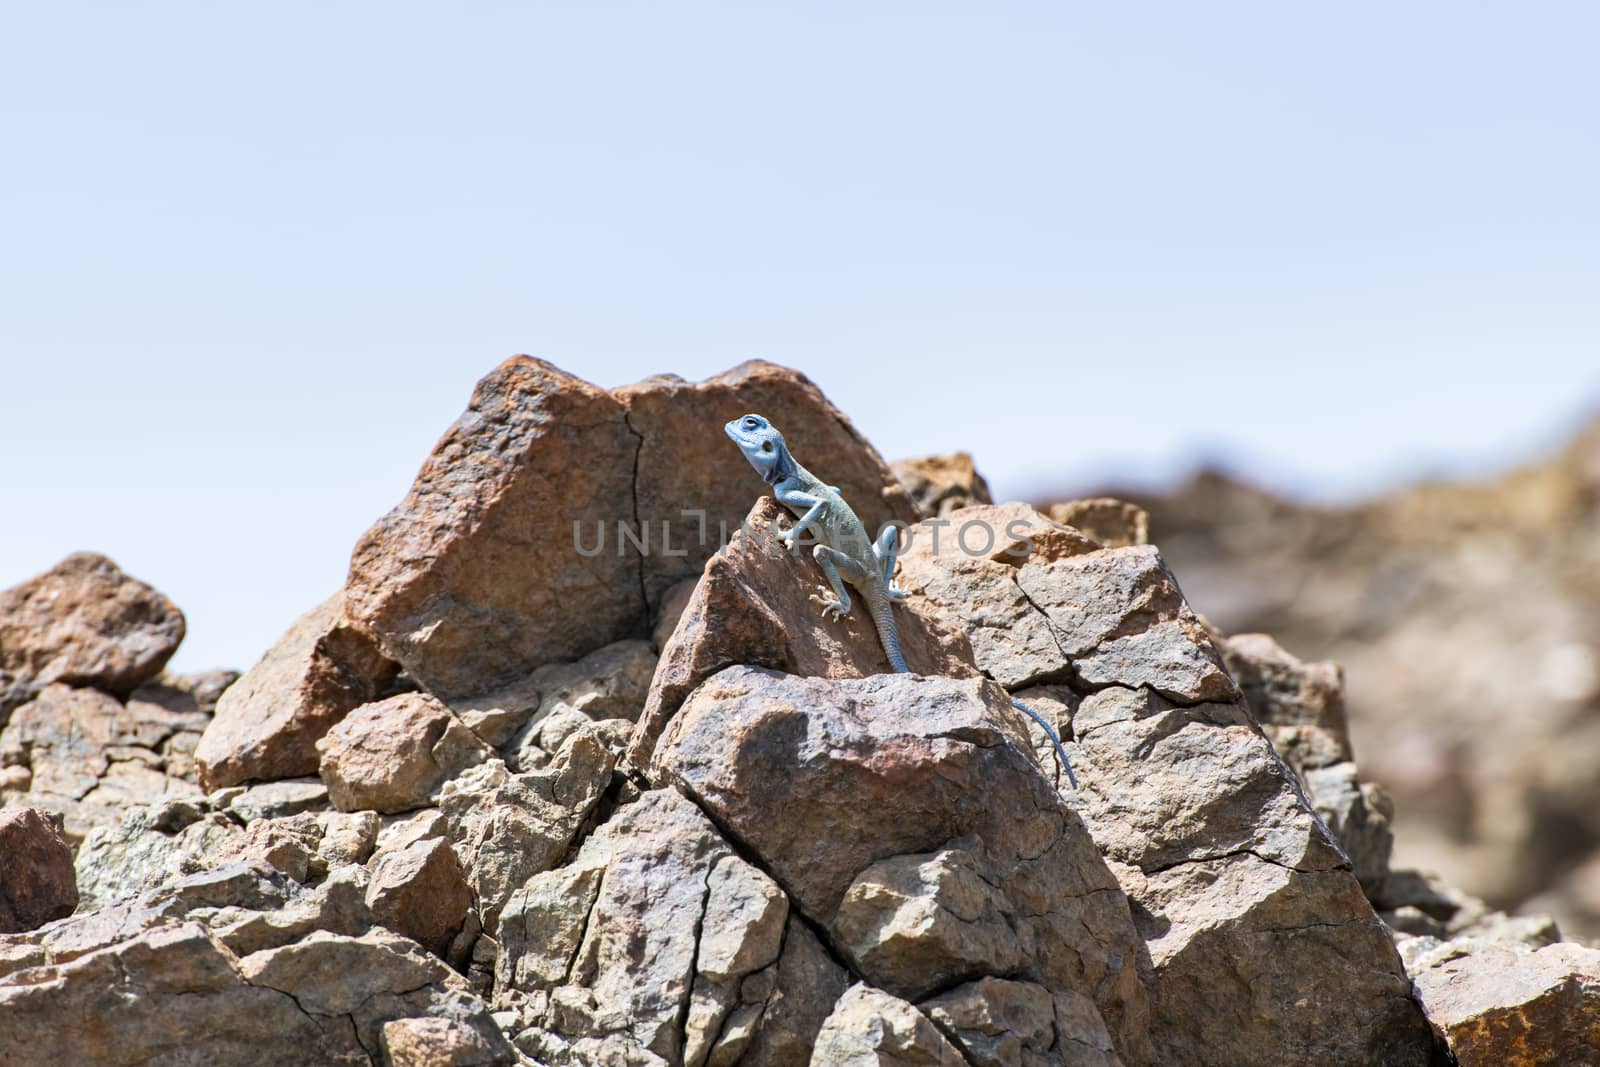 Male Sinai Agama (Pseudotrapelus sinaitus) with his sky-blue col by GABIS